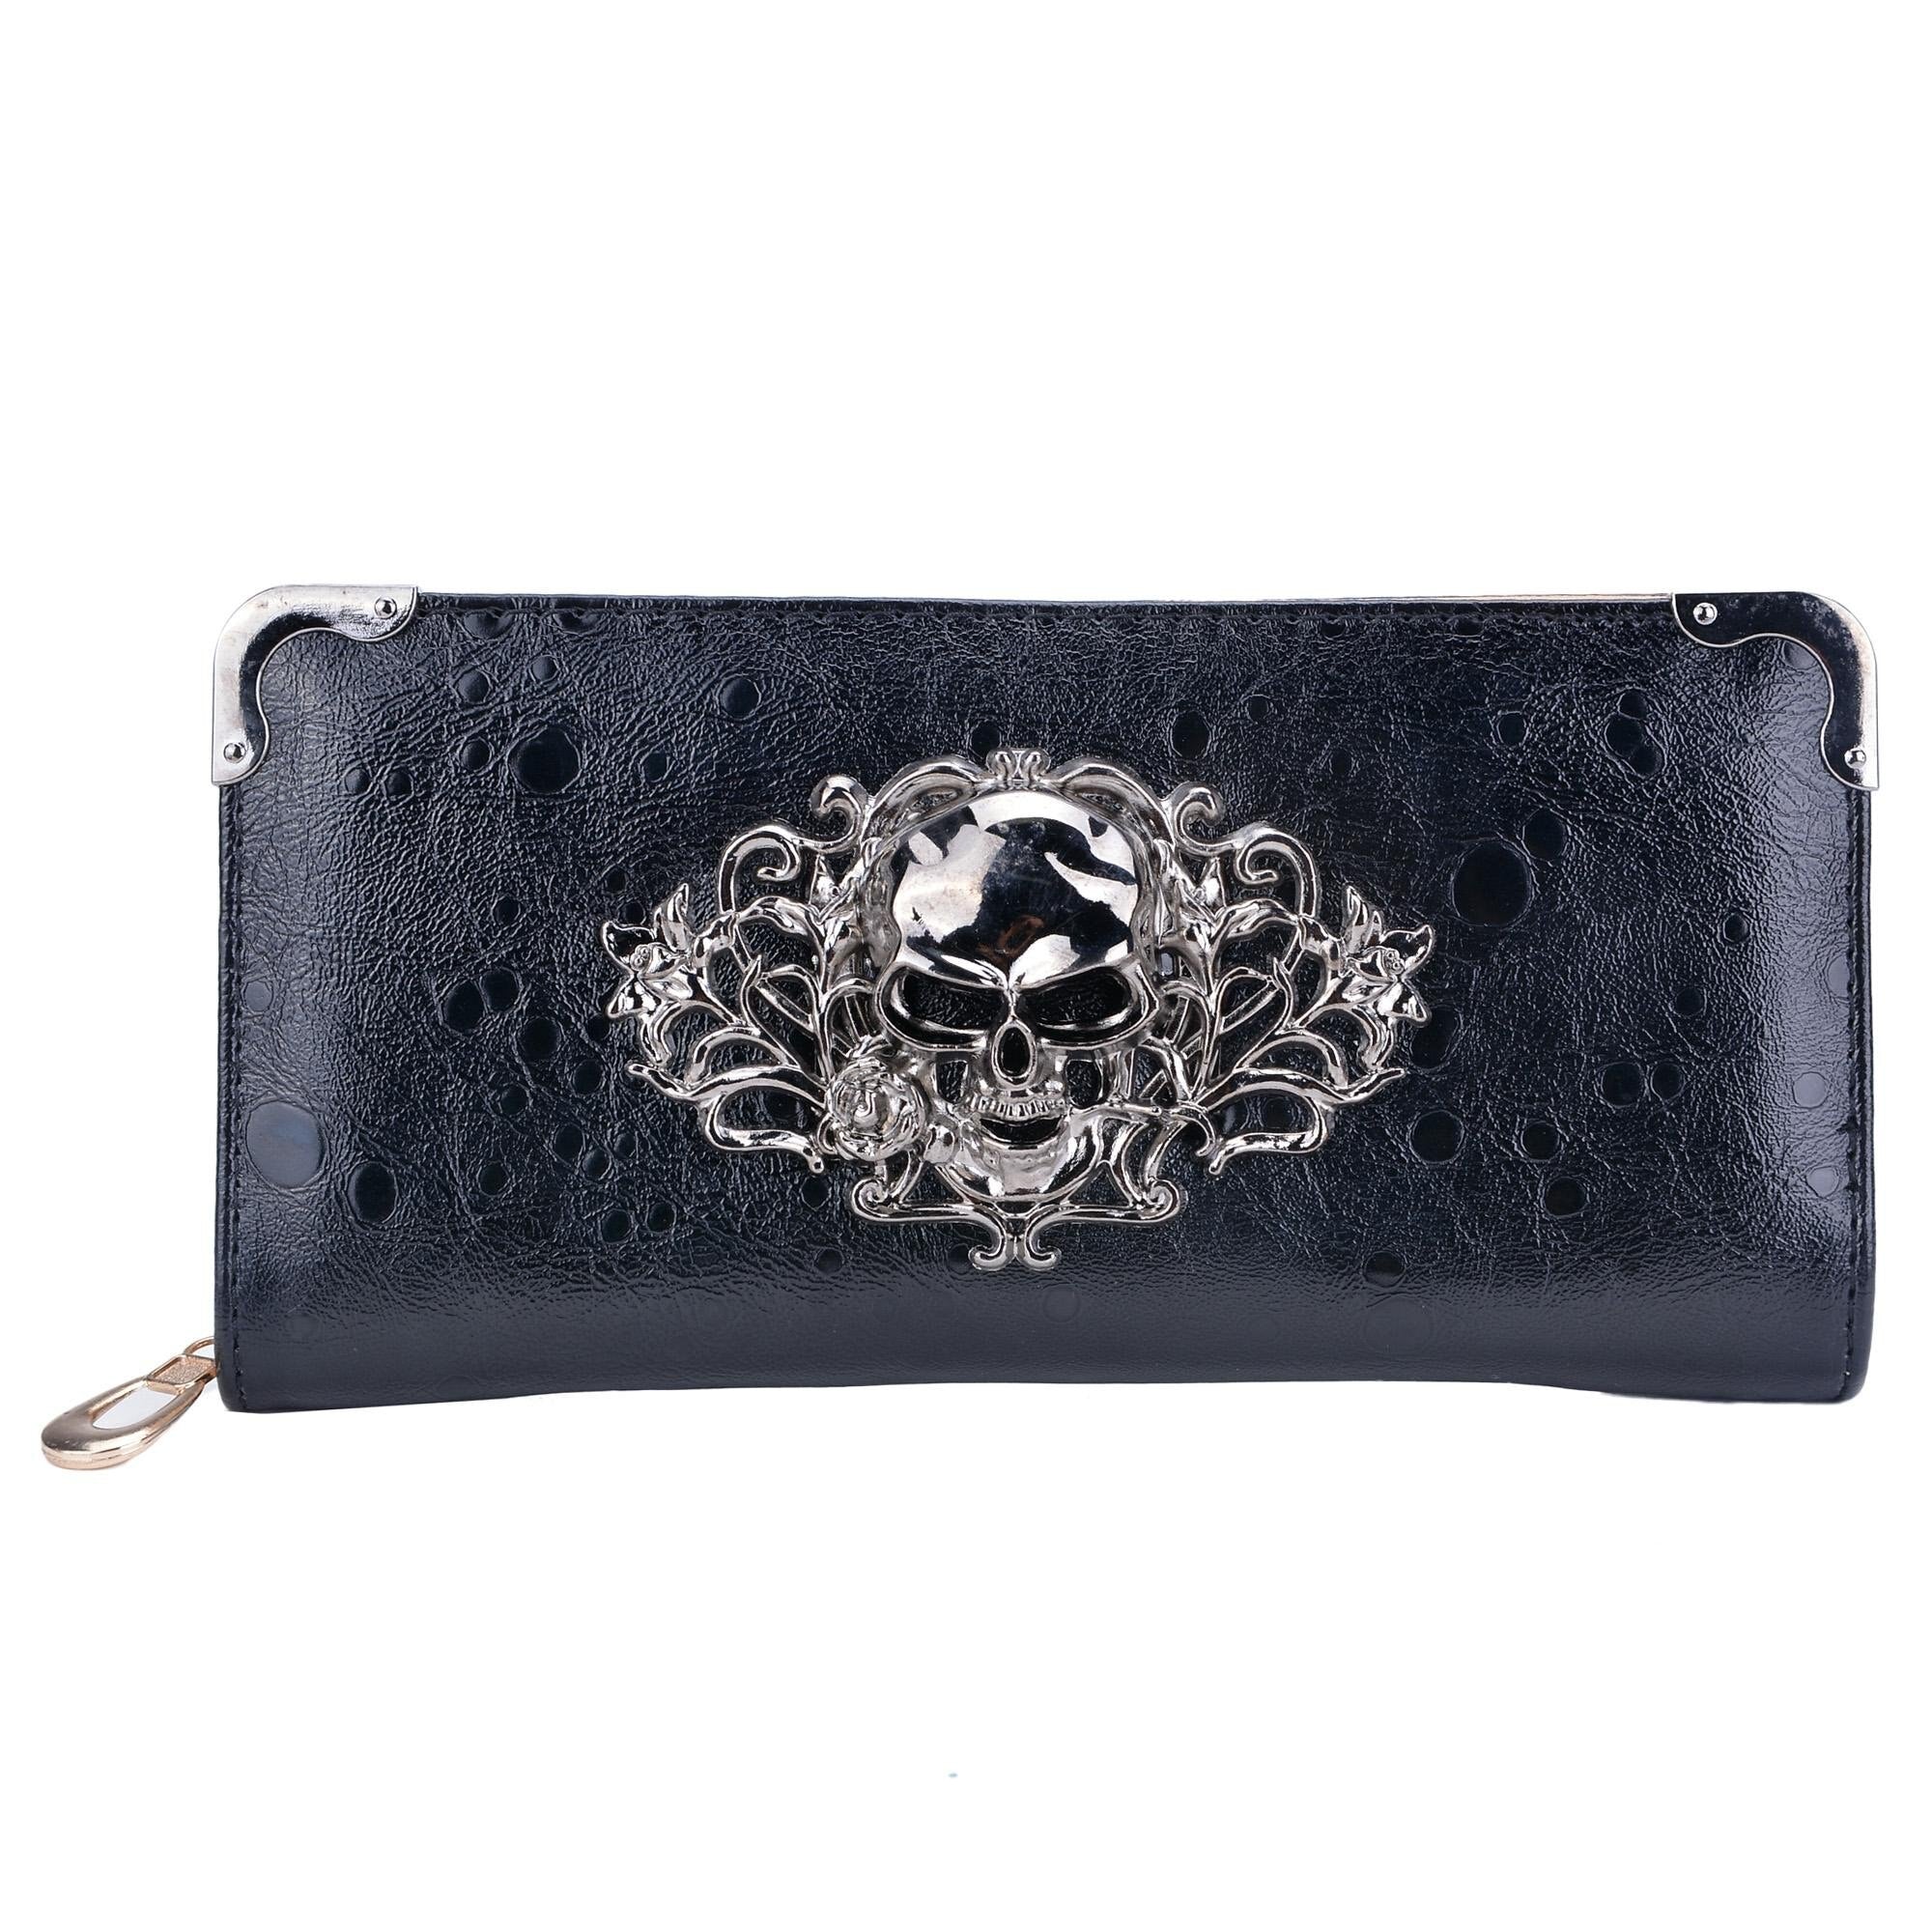 Cool Retro Skull Wallet for Women Vintage Clutch Bag Black - ebowsos